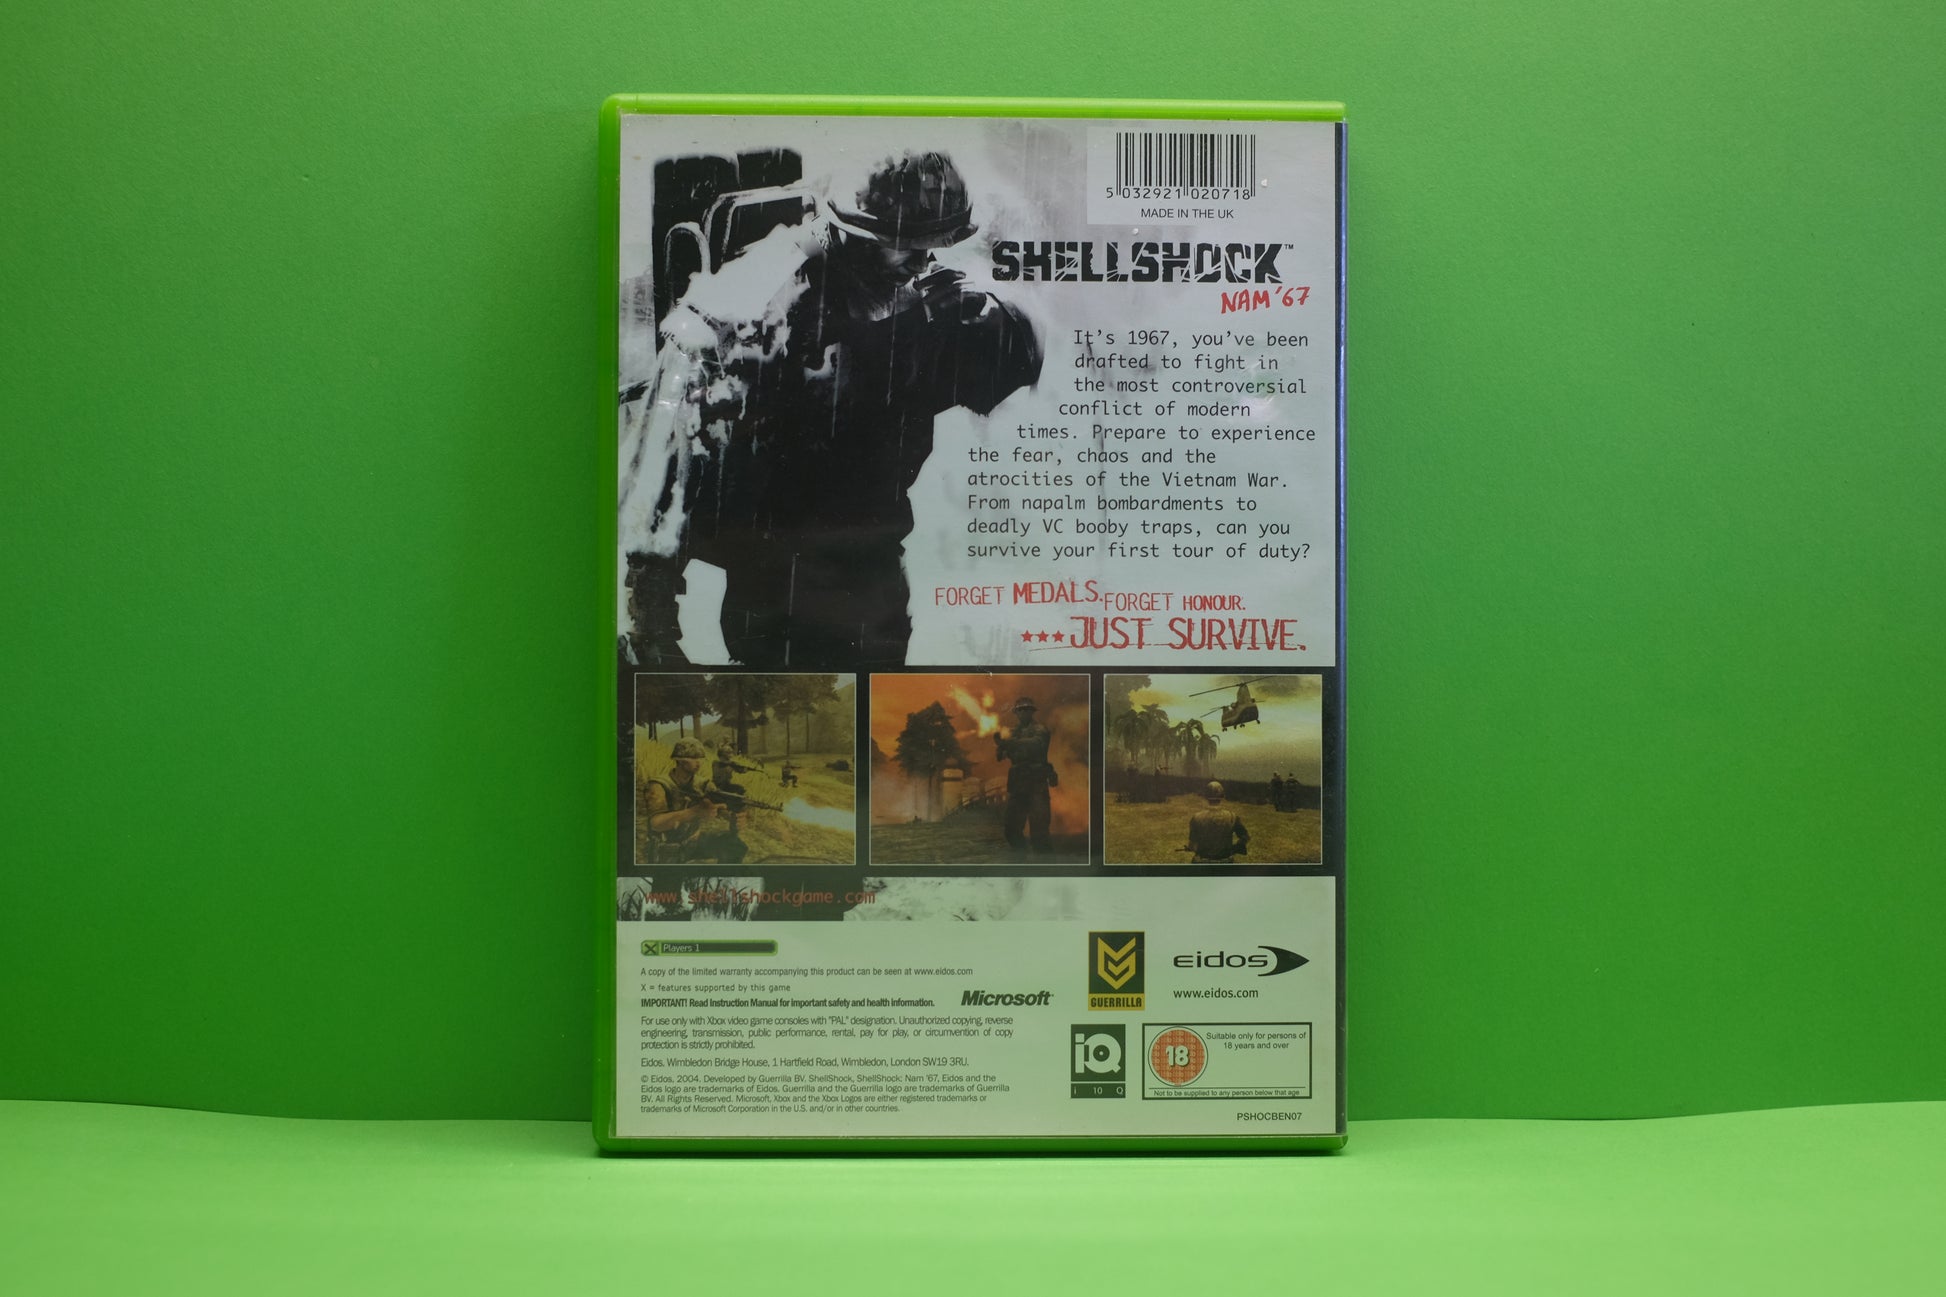 Shellshock Nam '67 Xbox Video Game